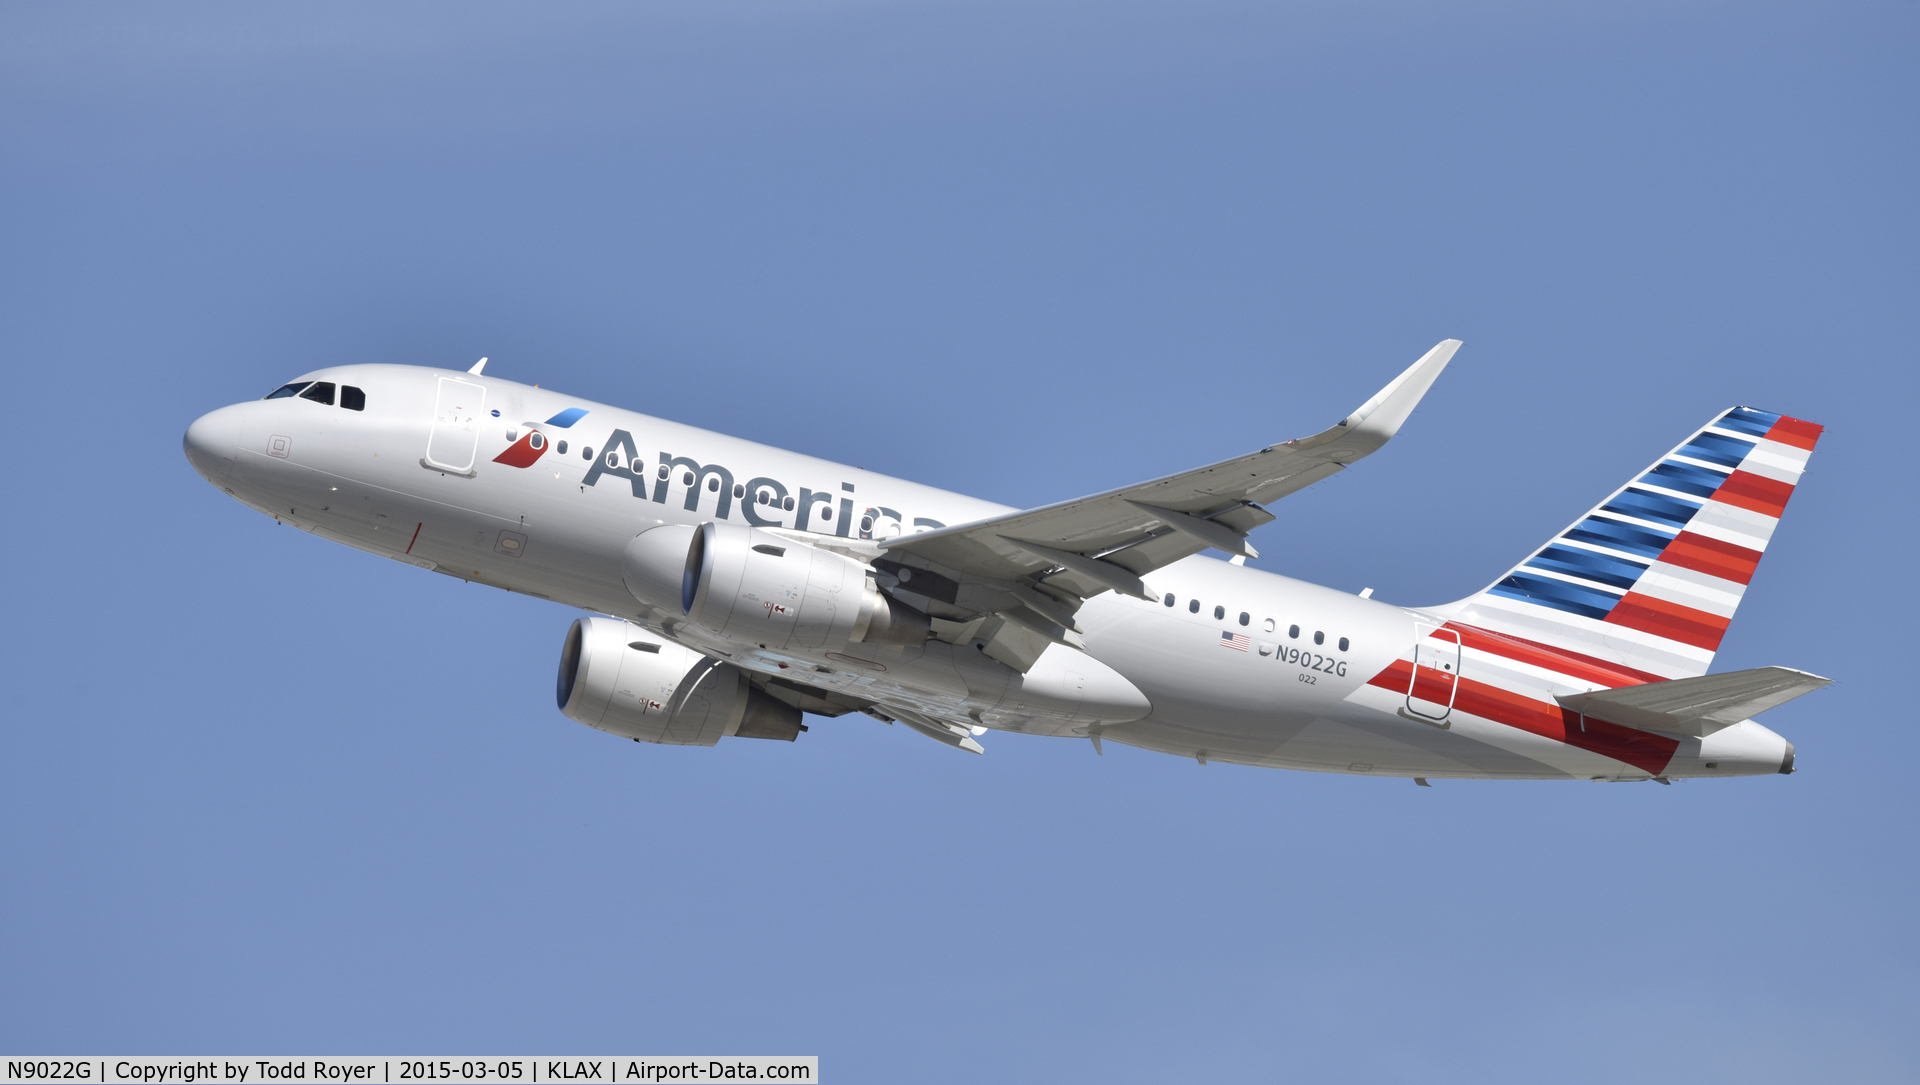 N9022G, 2014 Airbus A319-112 C/N 6310, Departing LAX on 25R